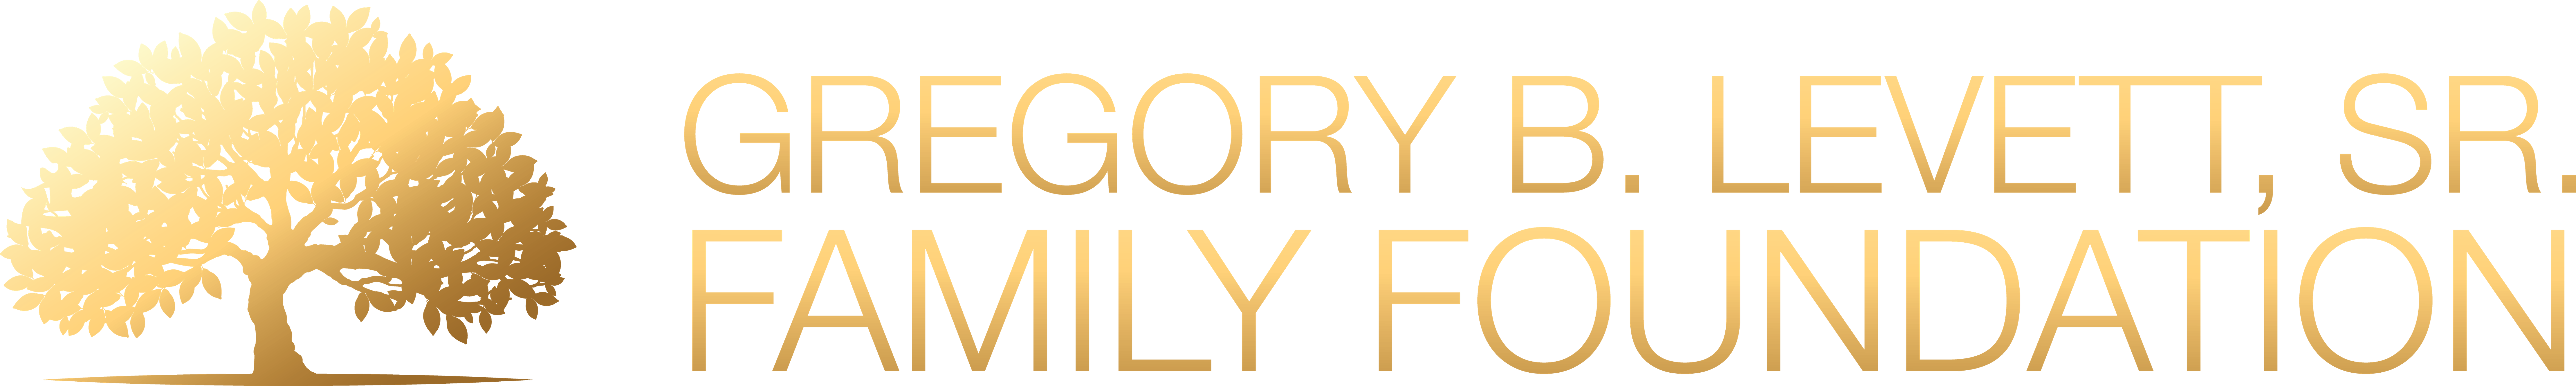 Gregory B. Levett Foundation